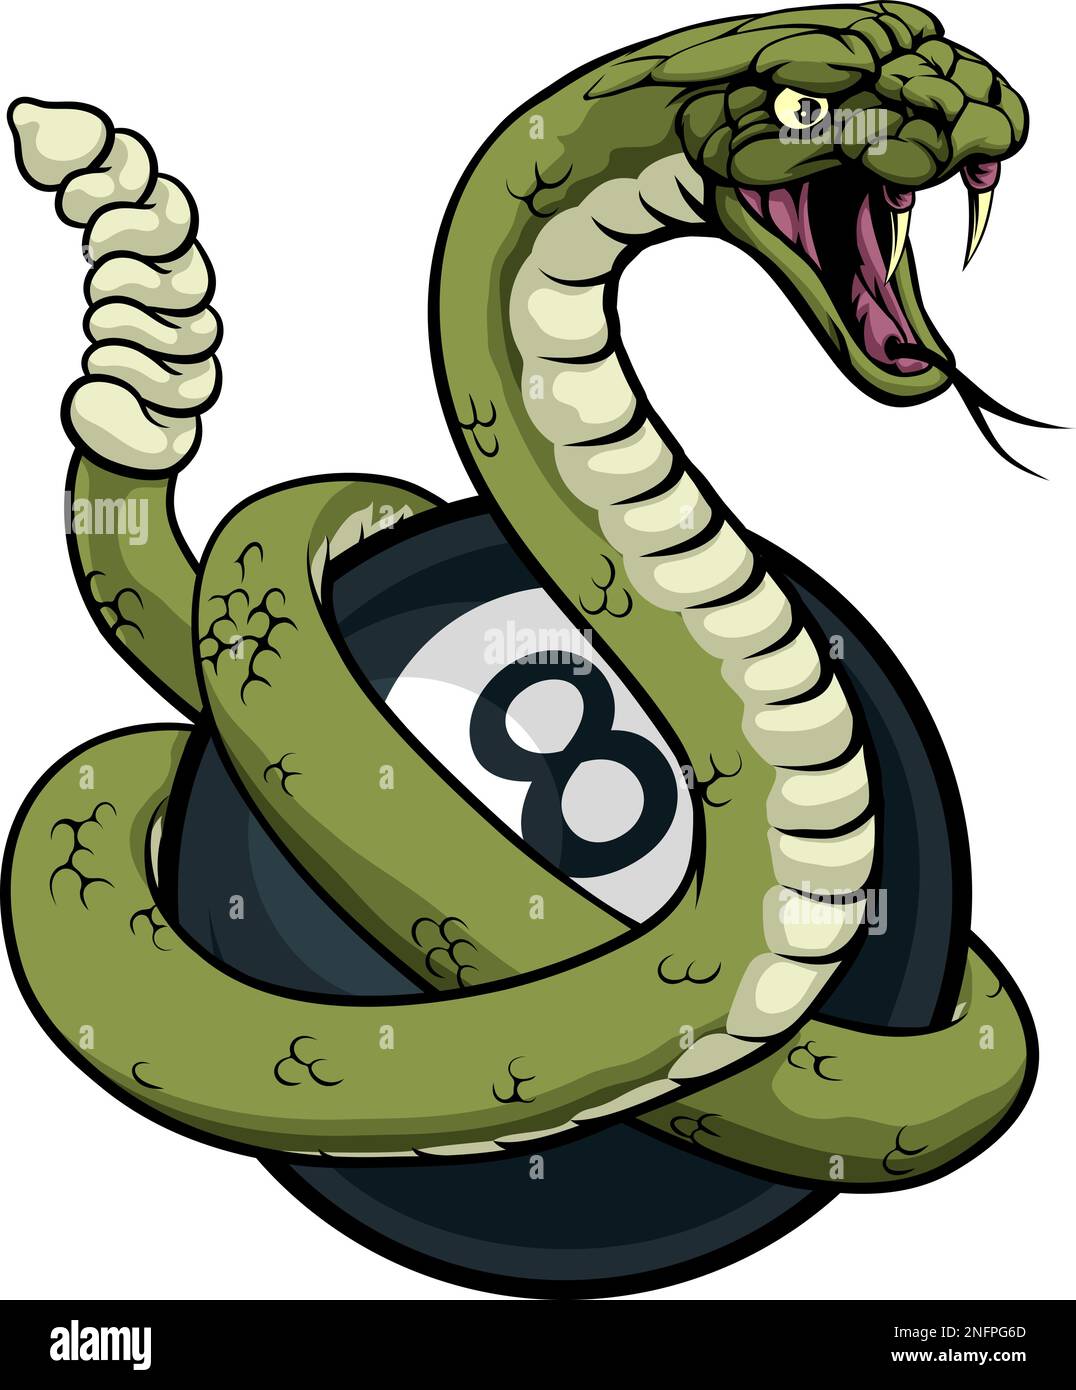 Rattlesnake Snake Pool 8 Ball Biliardo Mascot Illustrazione Vettoriale